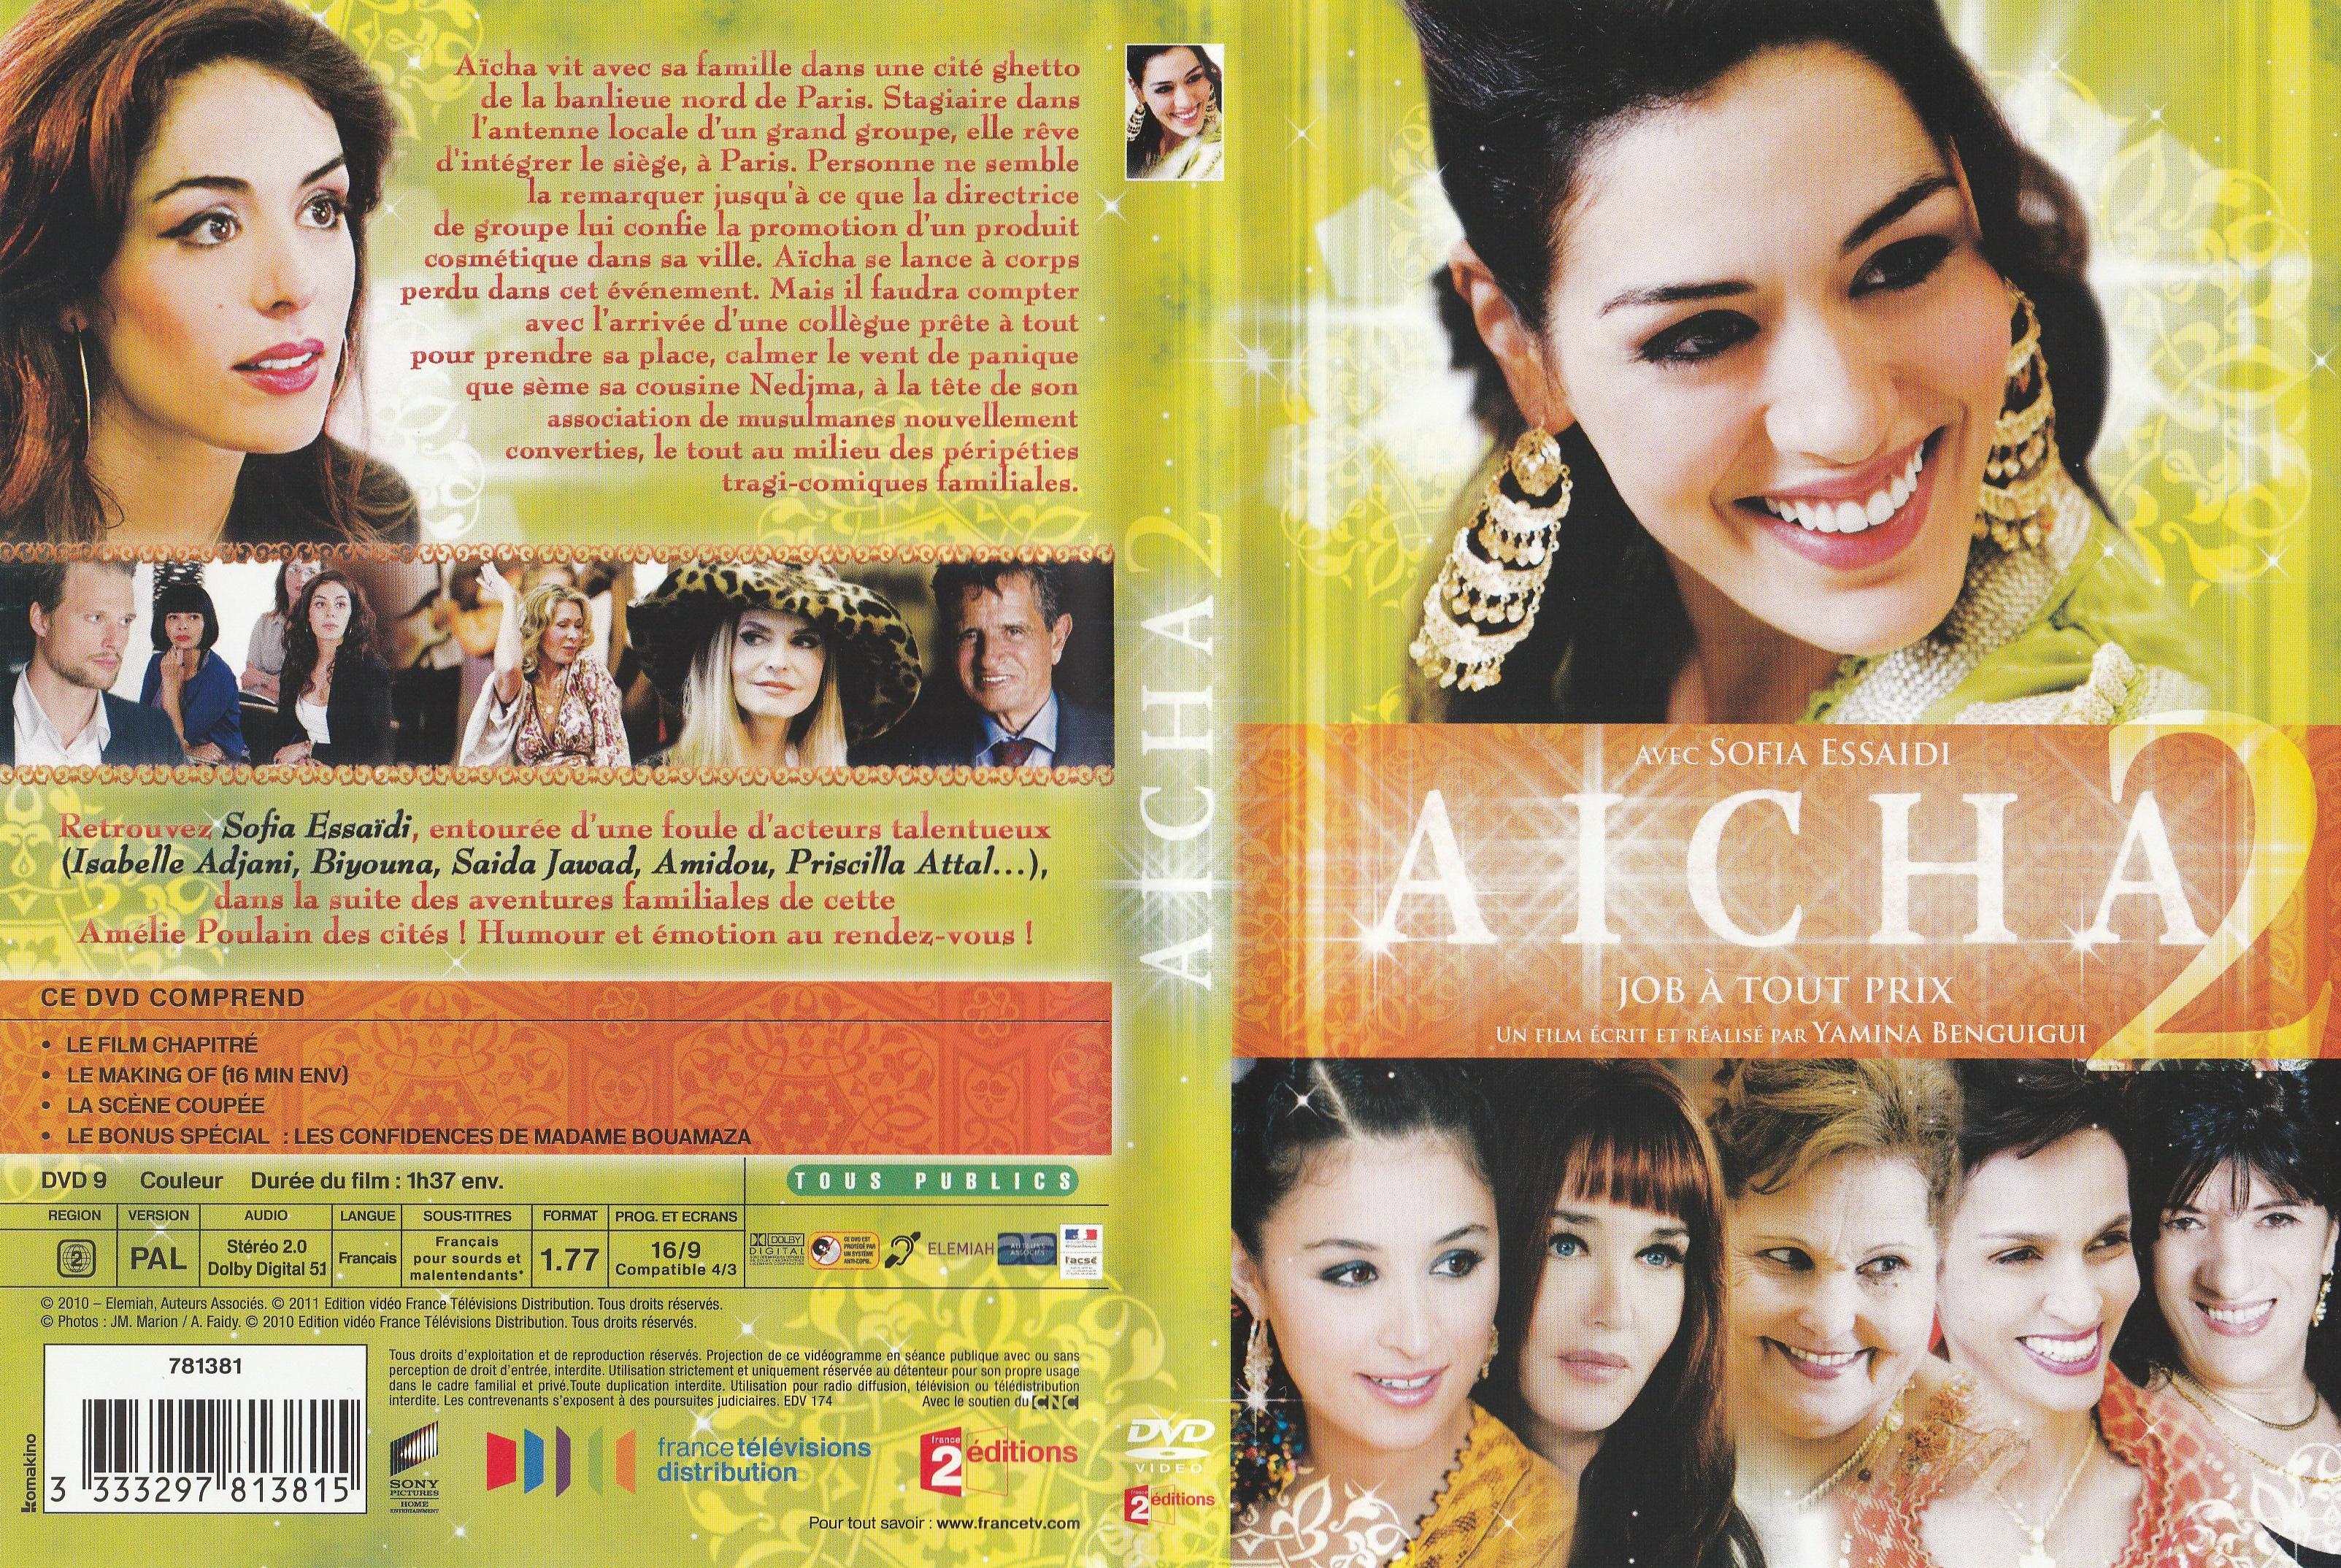 Jaquette DVD Aicha DVD 2